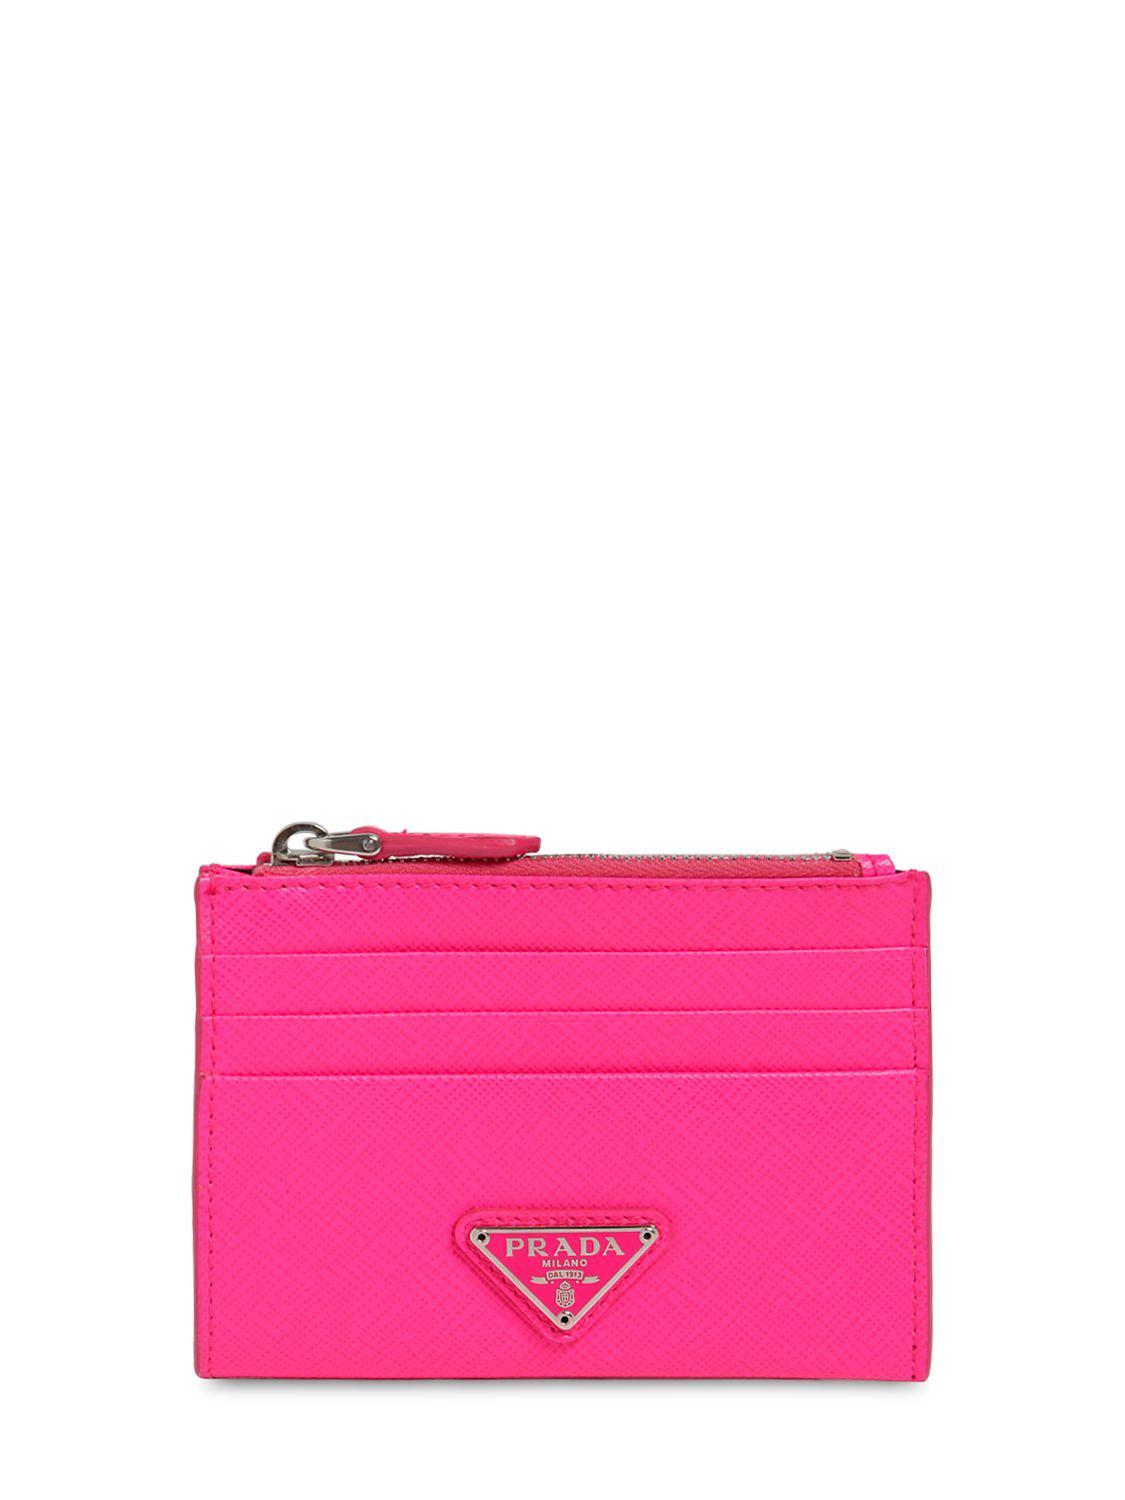 Prada Saffiano Leather Credit Card Holder in Neon Fuchsia (Pink 